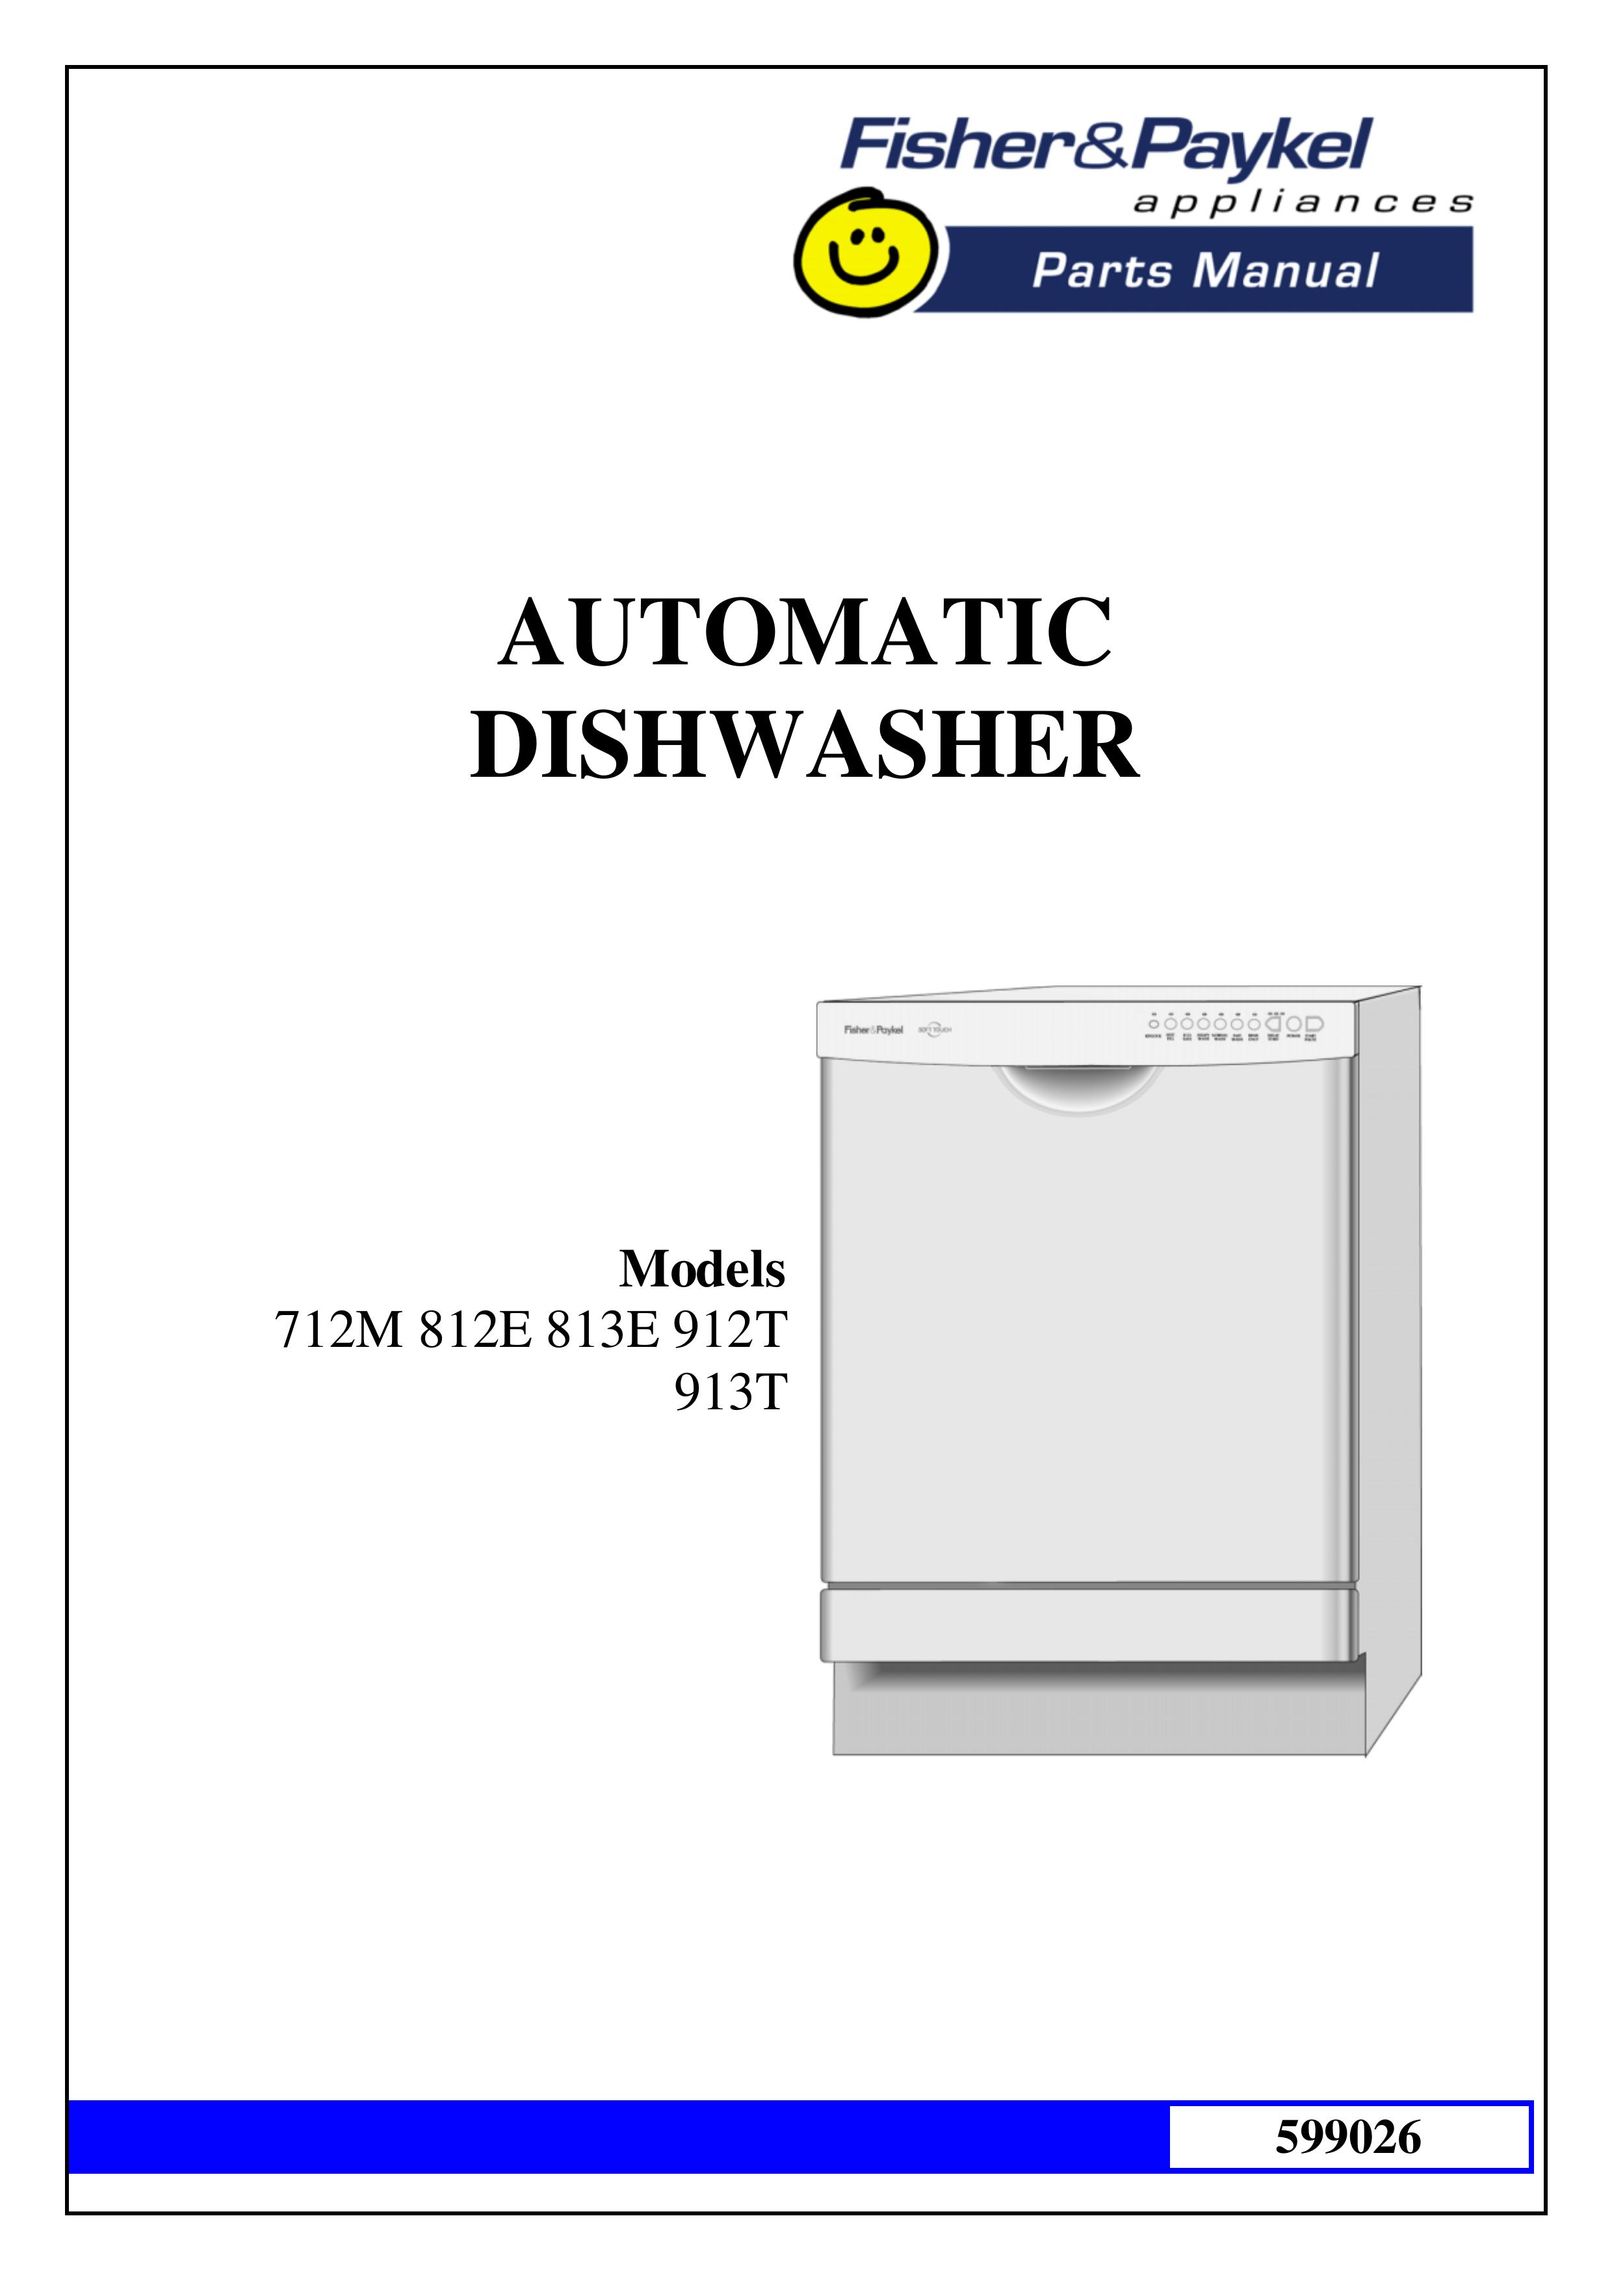 GE 812E Dishwasher User Manual